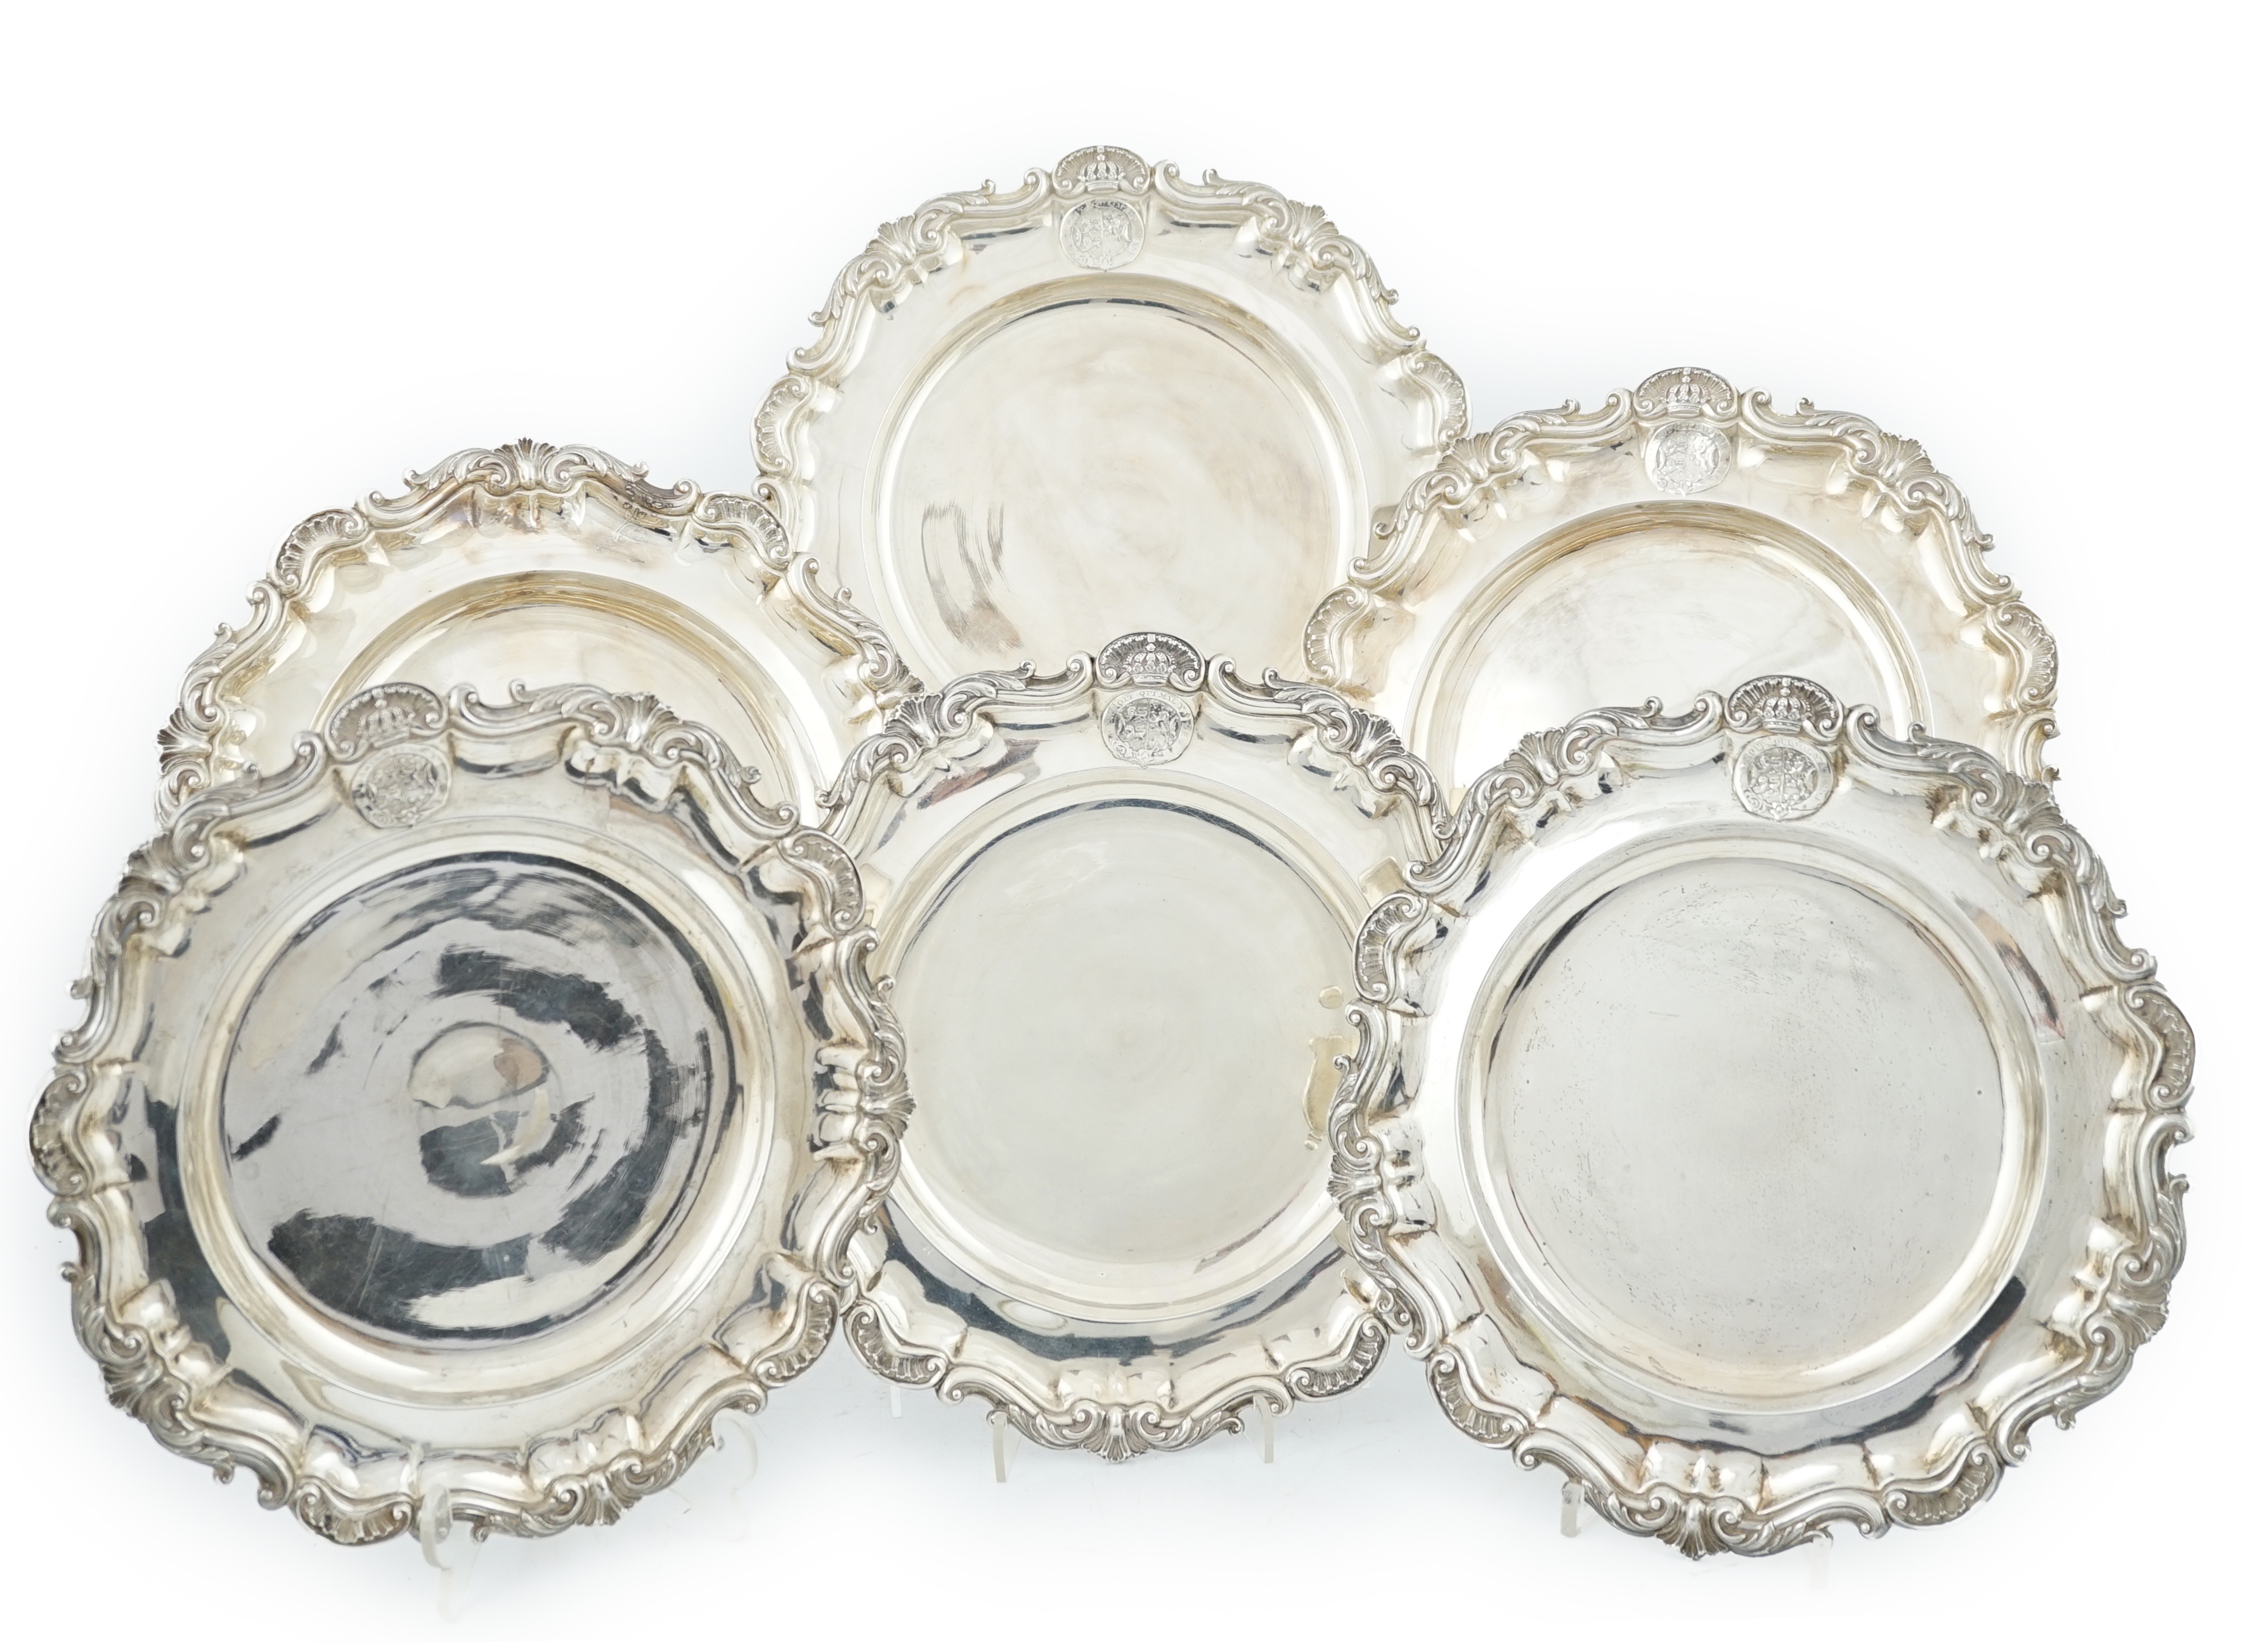 Duke of Brunswick Service: A set of six early Victorian silver dinner plates by John Mortimer & John Samuel Hunt                                                                                                            